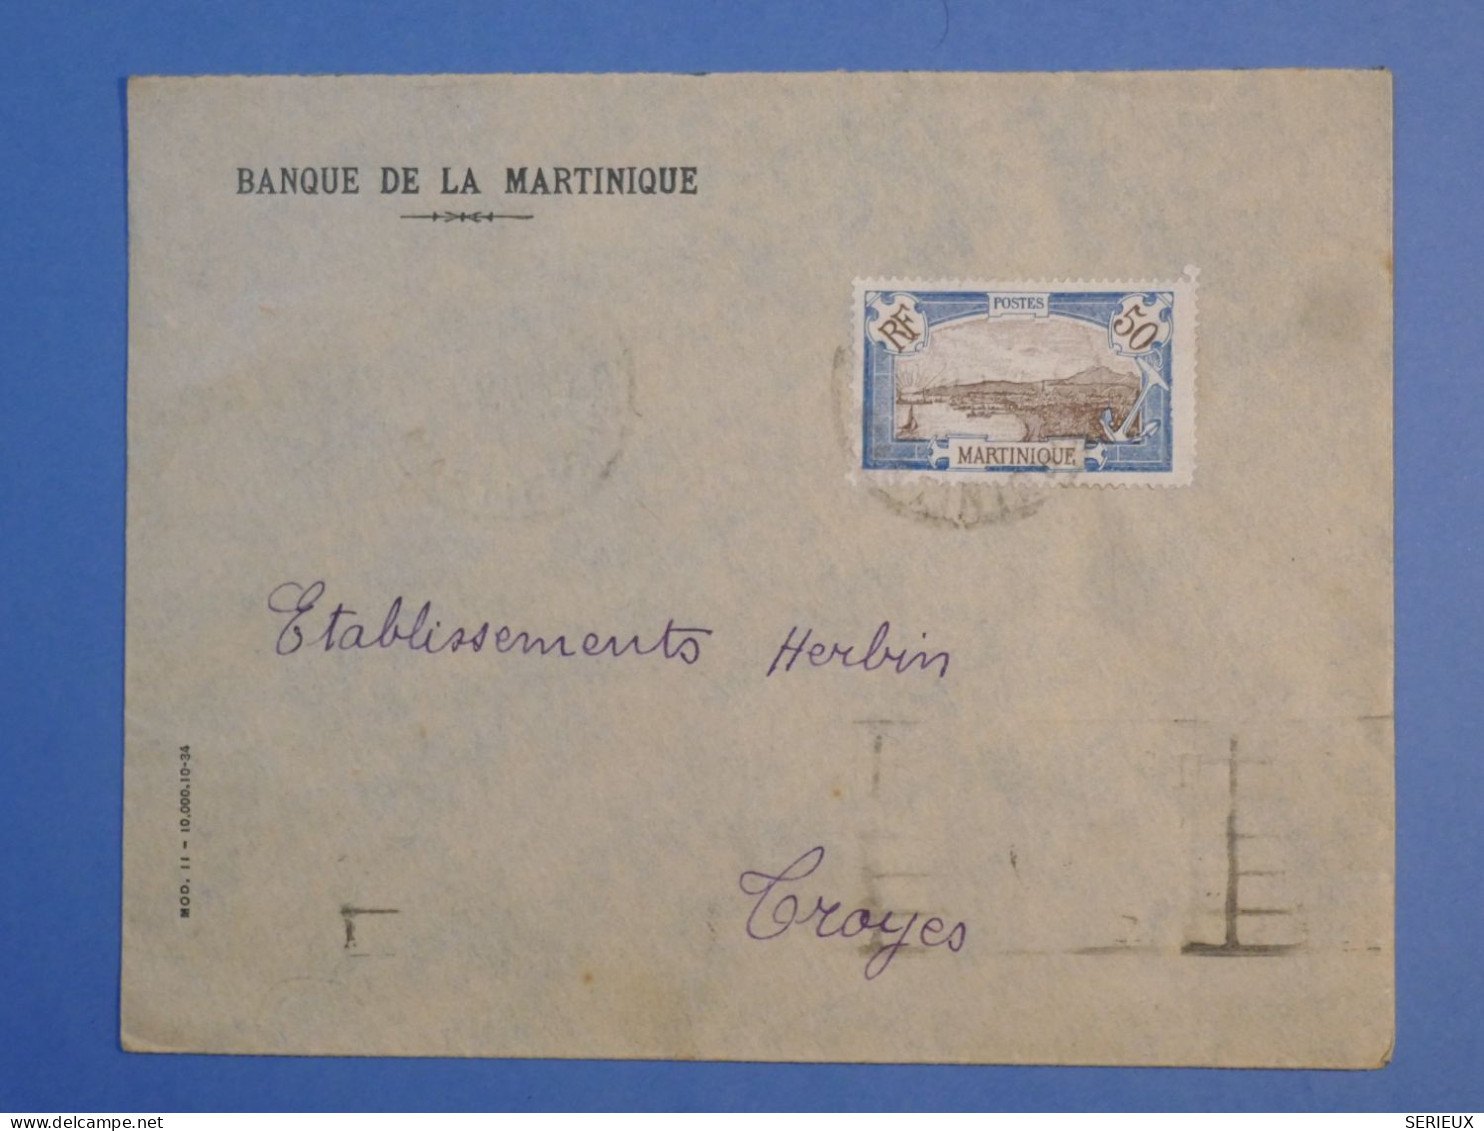 DK 12 MARTINIQUE   BELLE LETTRE    BANQUE 1935 A TROYES  FRANCE ++AFF. INTERESSANT++++ + - Covers & Documents